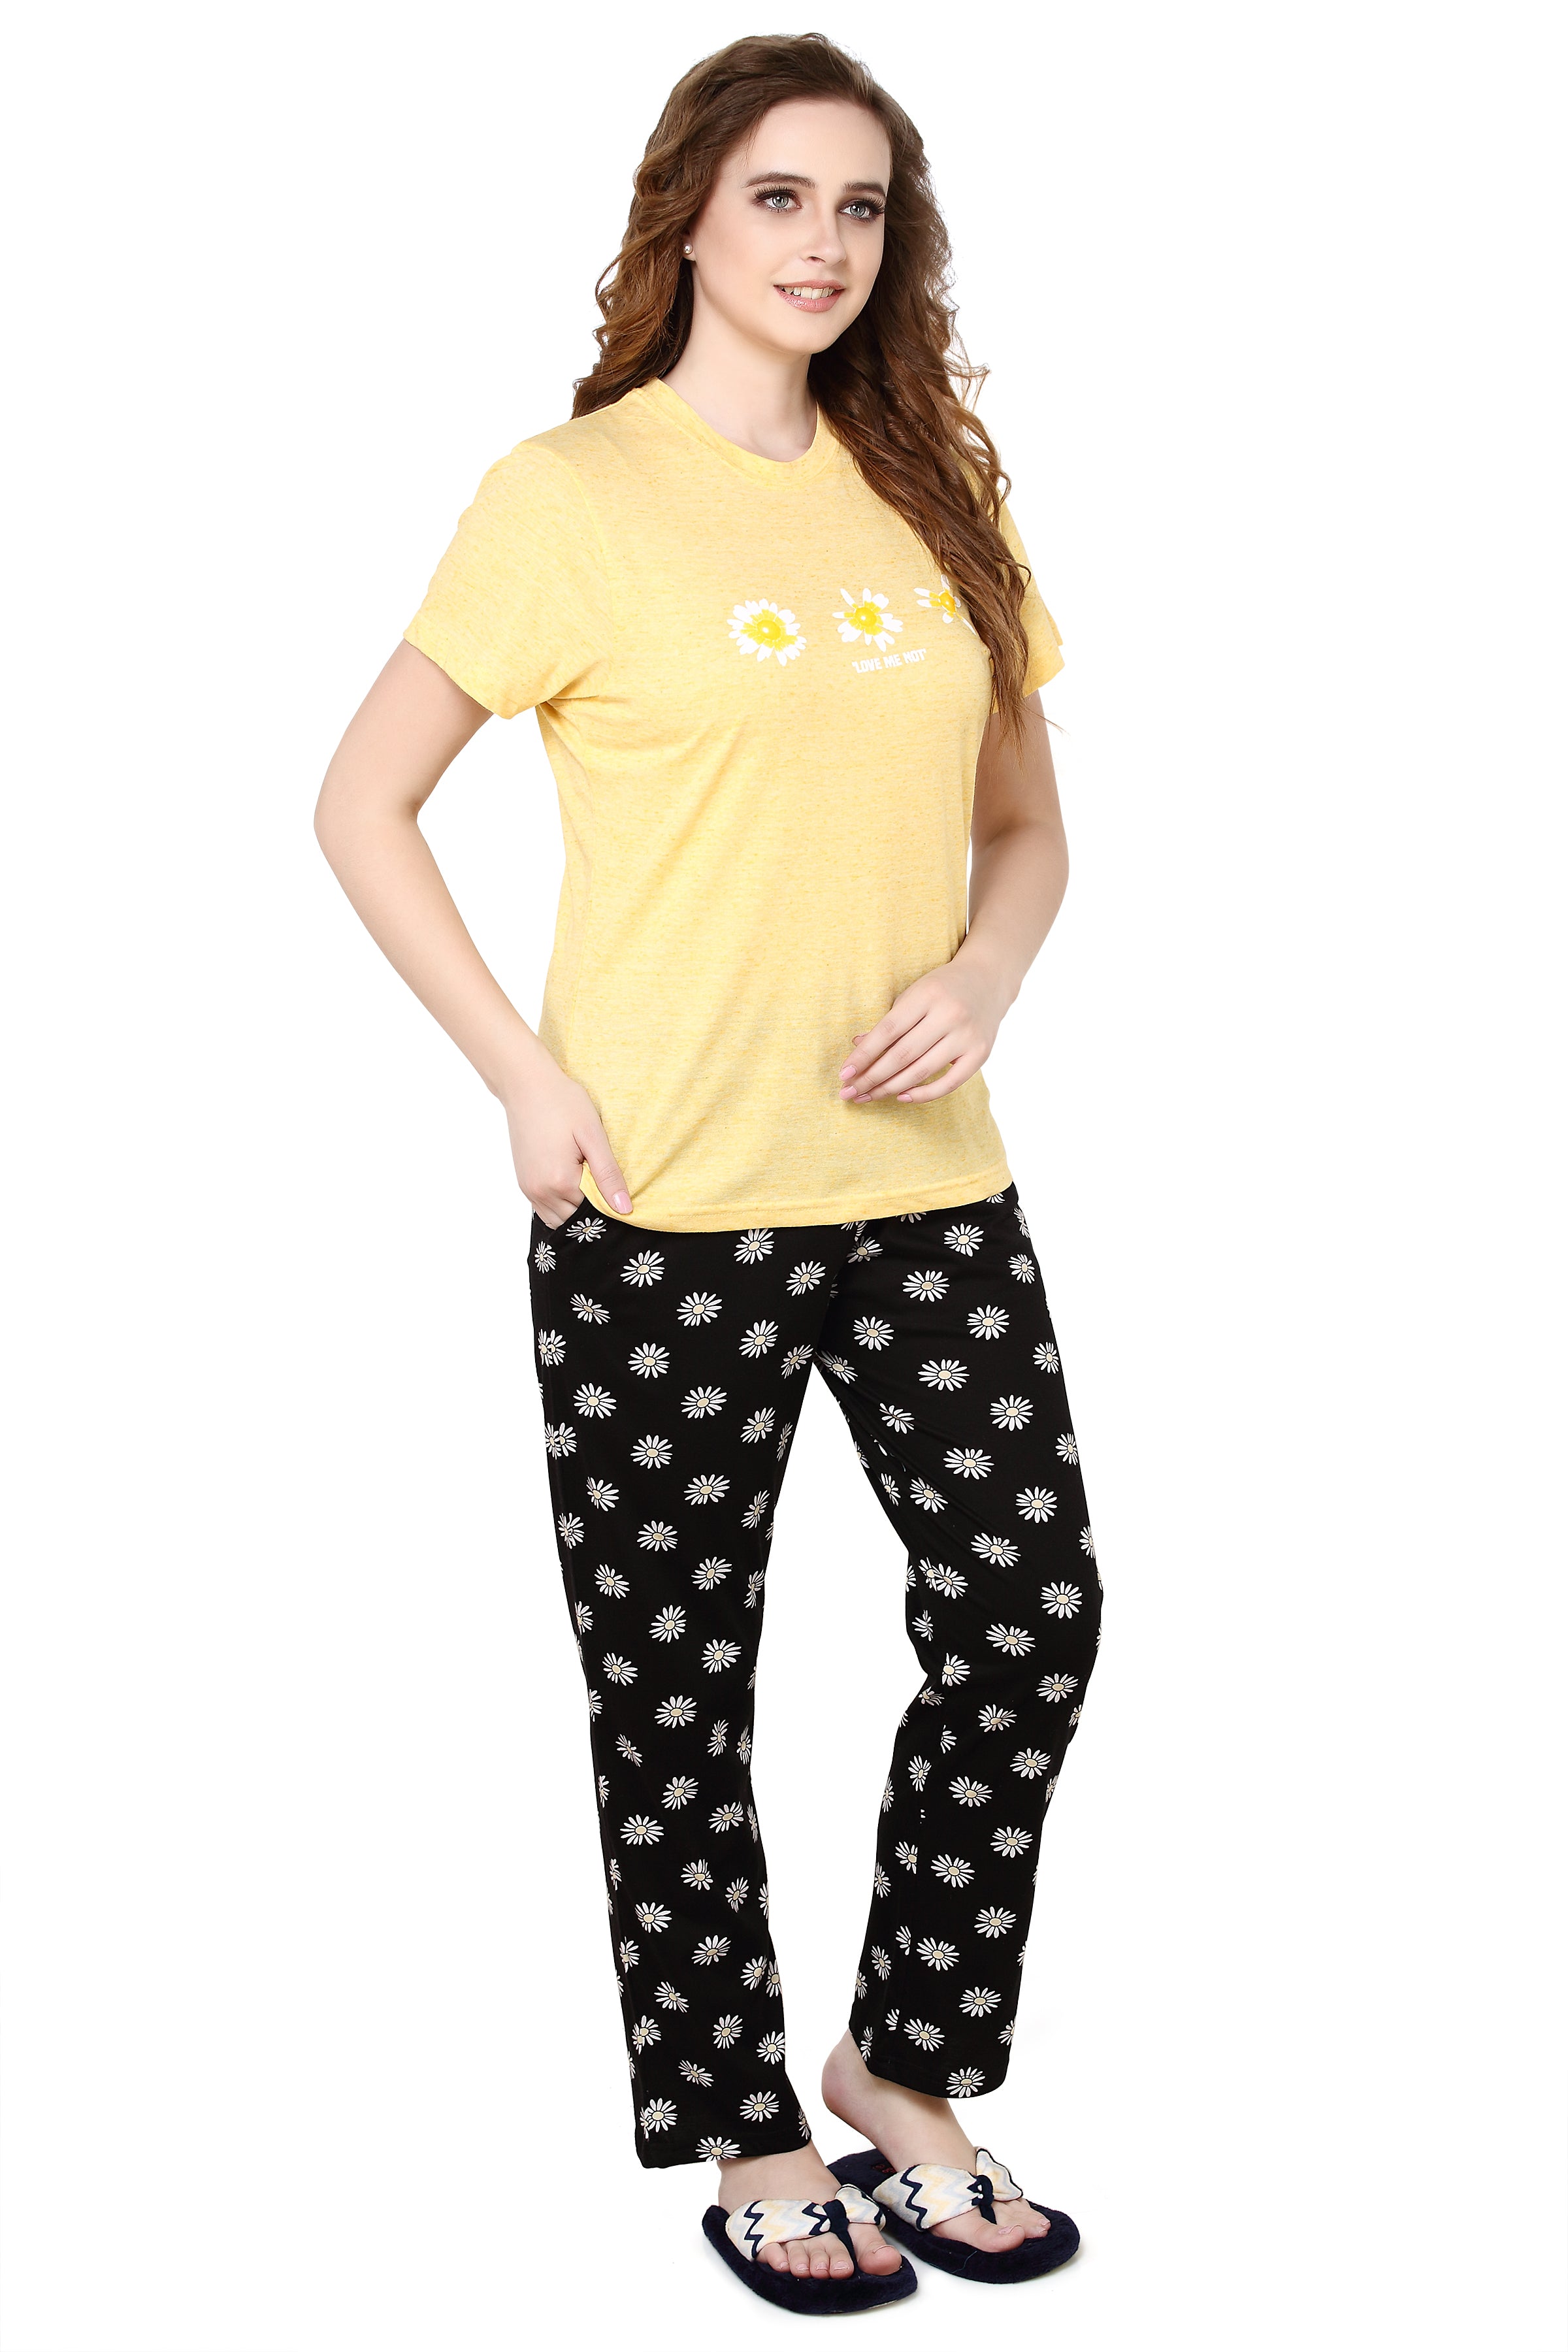 evolove Buttercup Round Neck Flower print Women's (Pajama set), (Yellow & Black), S Get free eyemask inside of any design